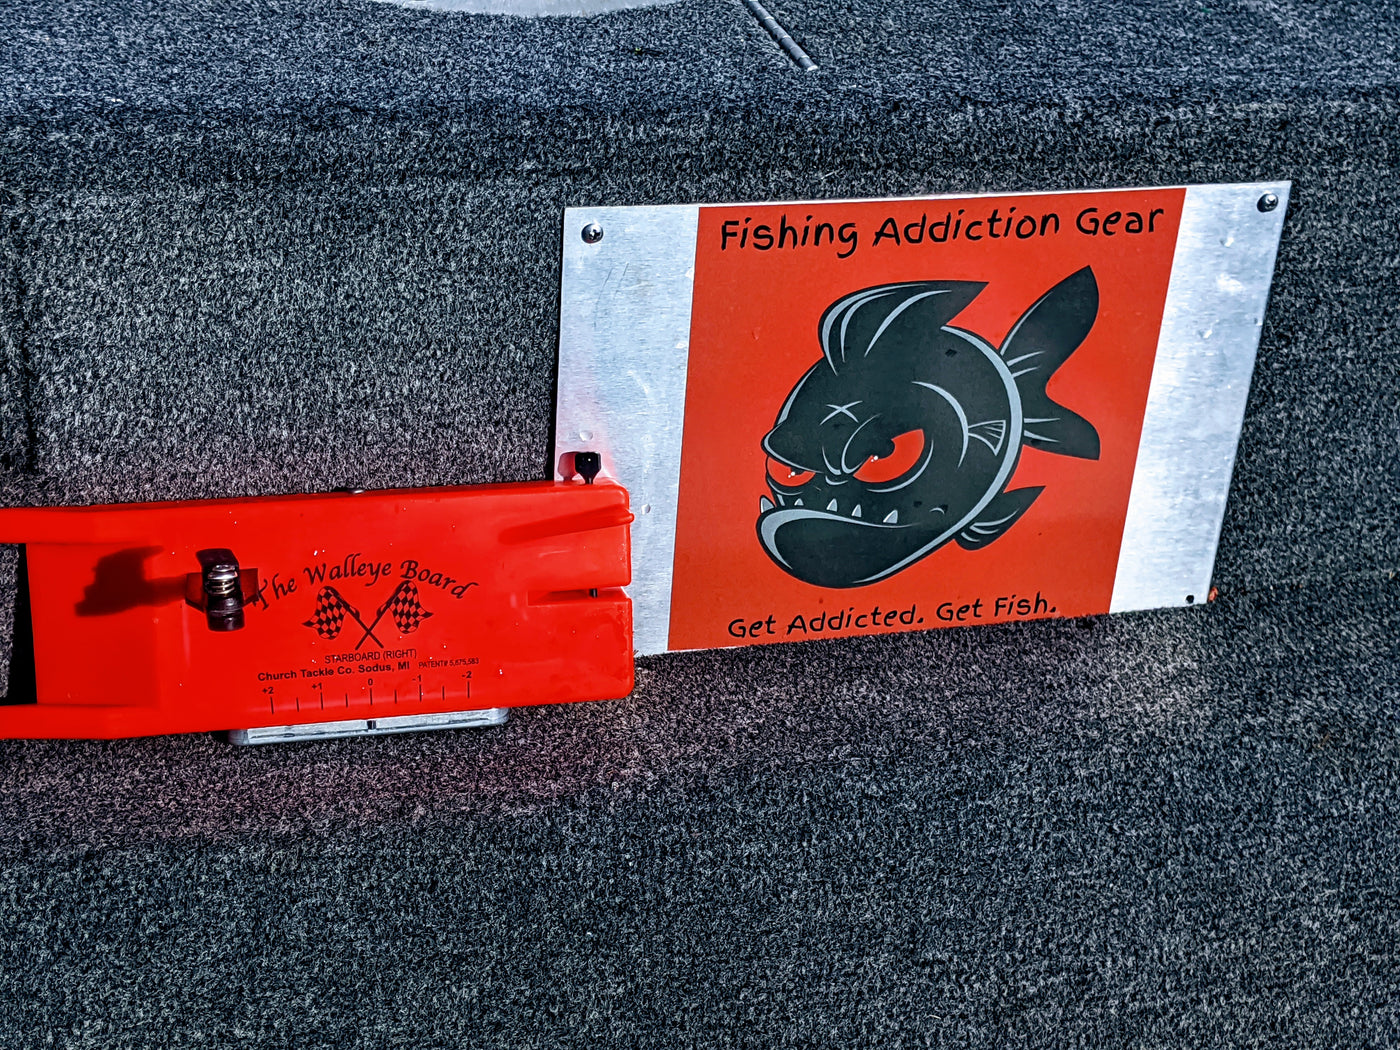 Church Tackle Walleye Boards – Fishing Addiction Gear